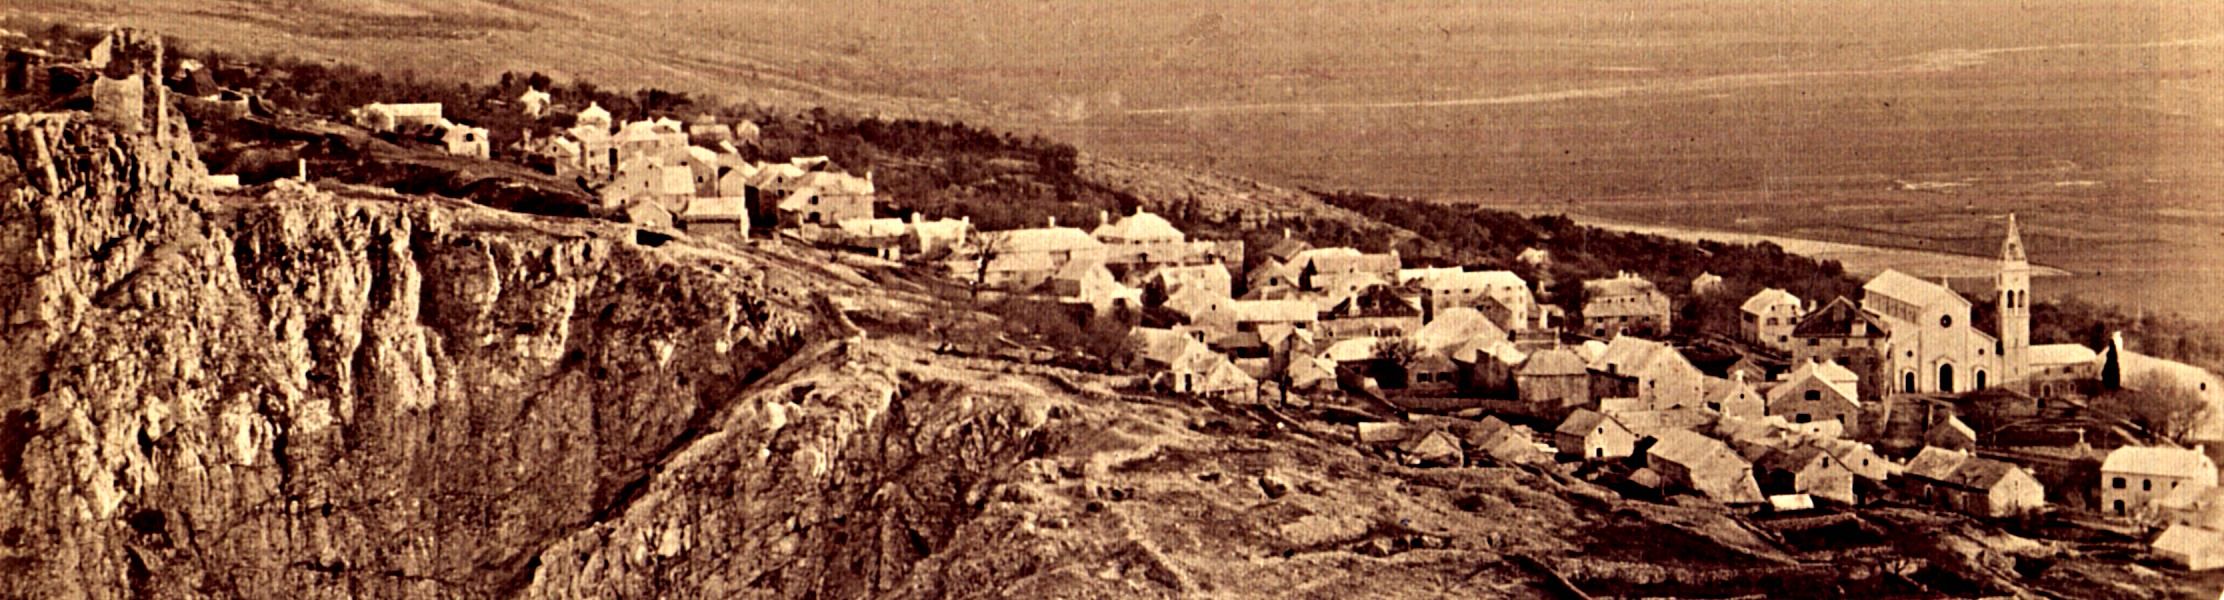 Imotski Panorama 1880-ies